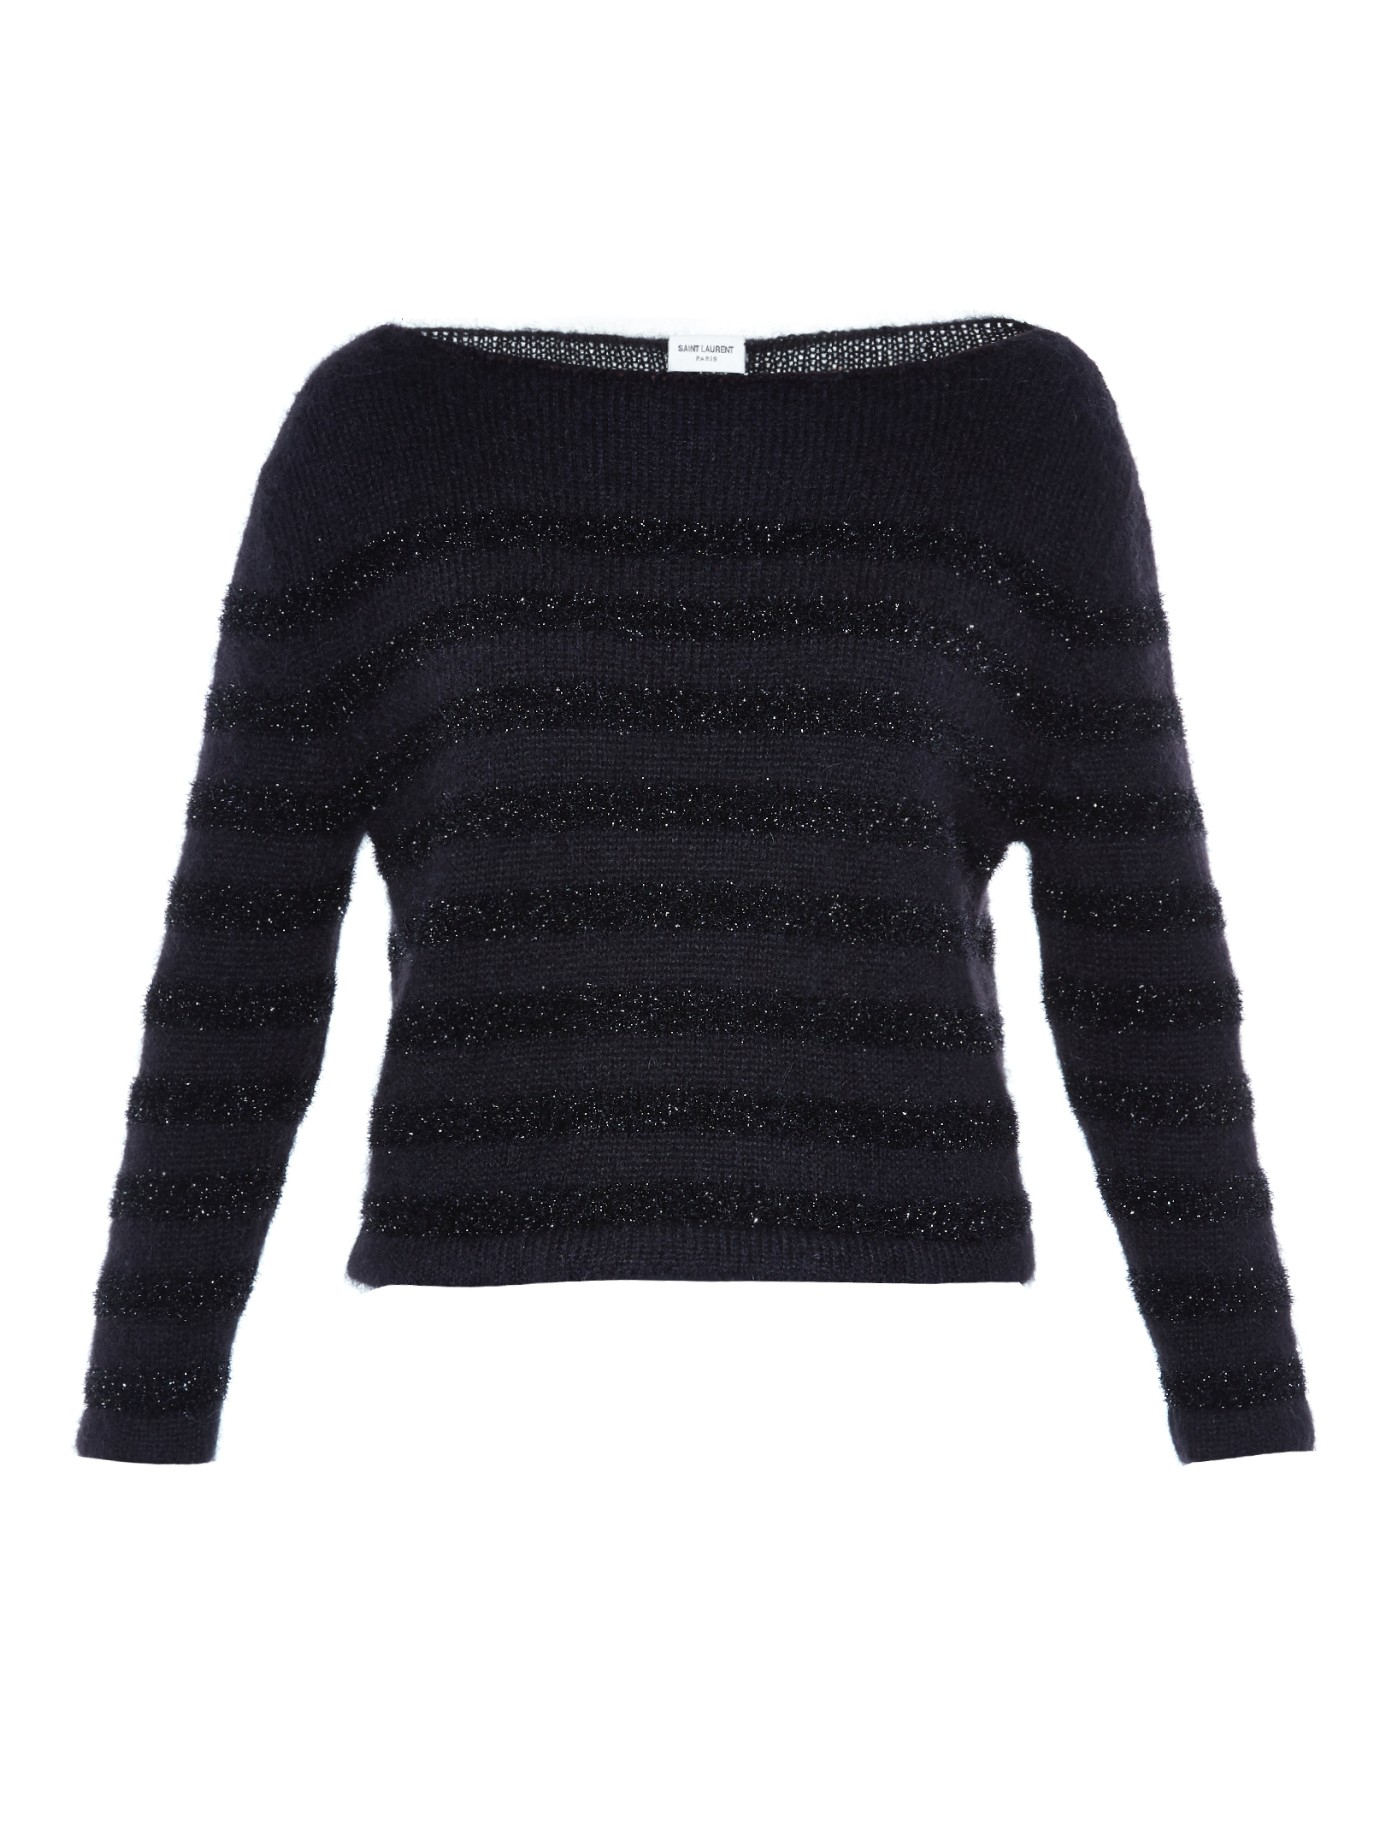 Lyst - Saint Laurent Boat-neck Striped Knit Sweater in Black